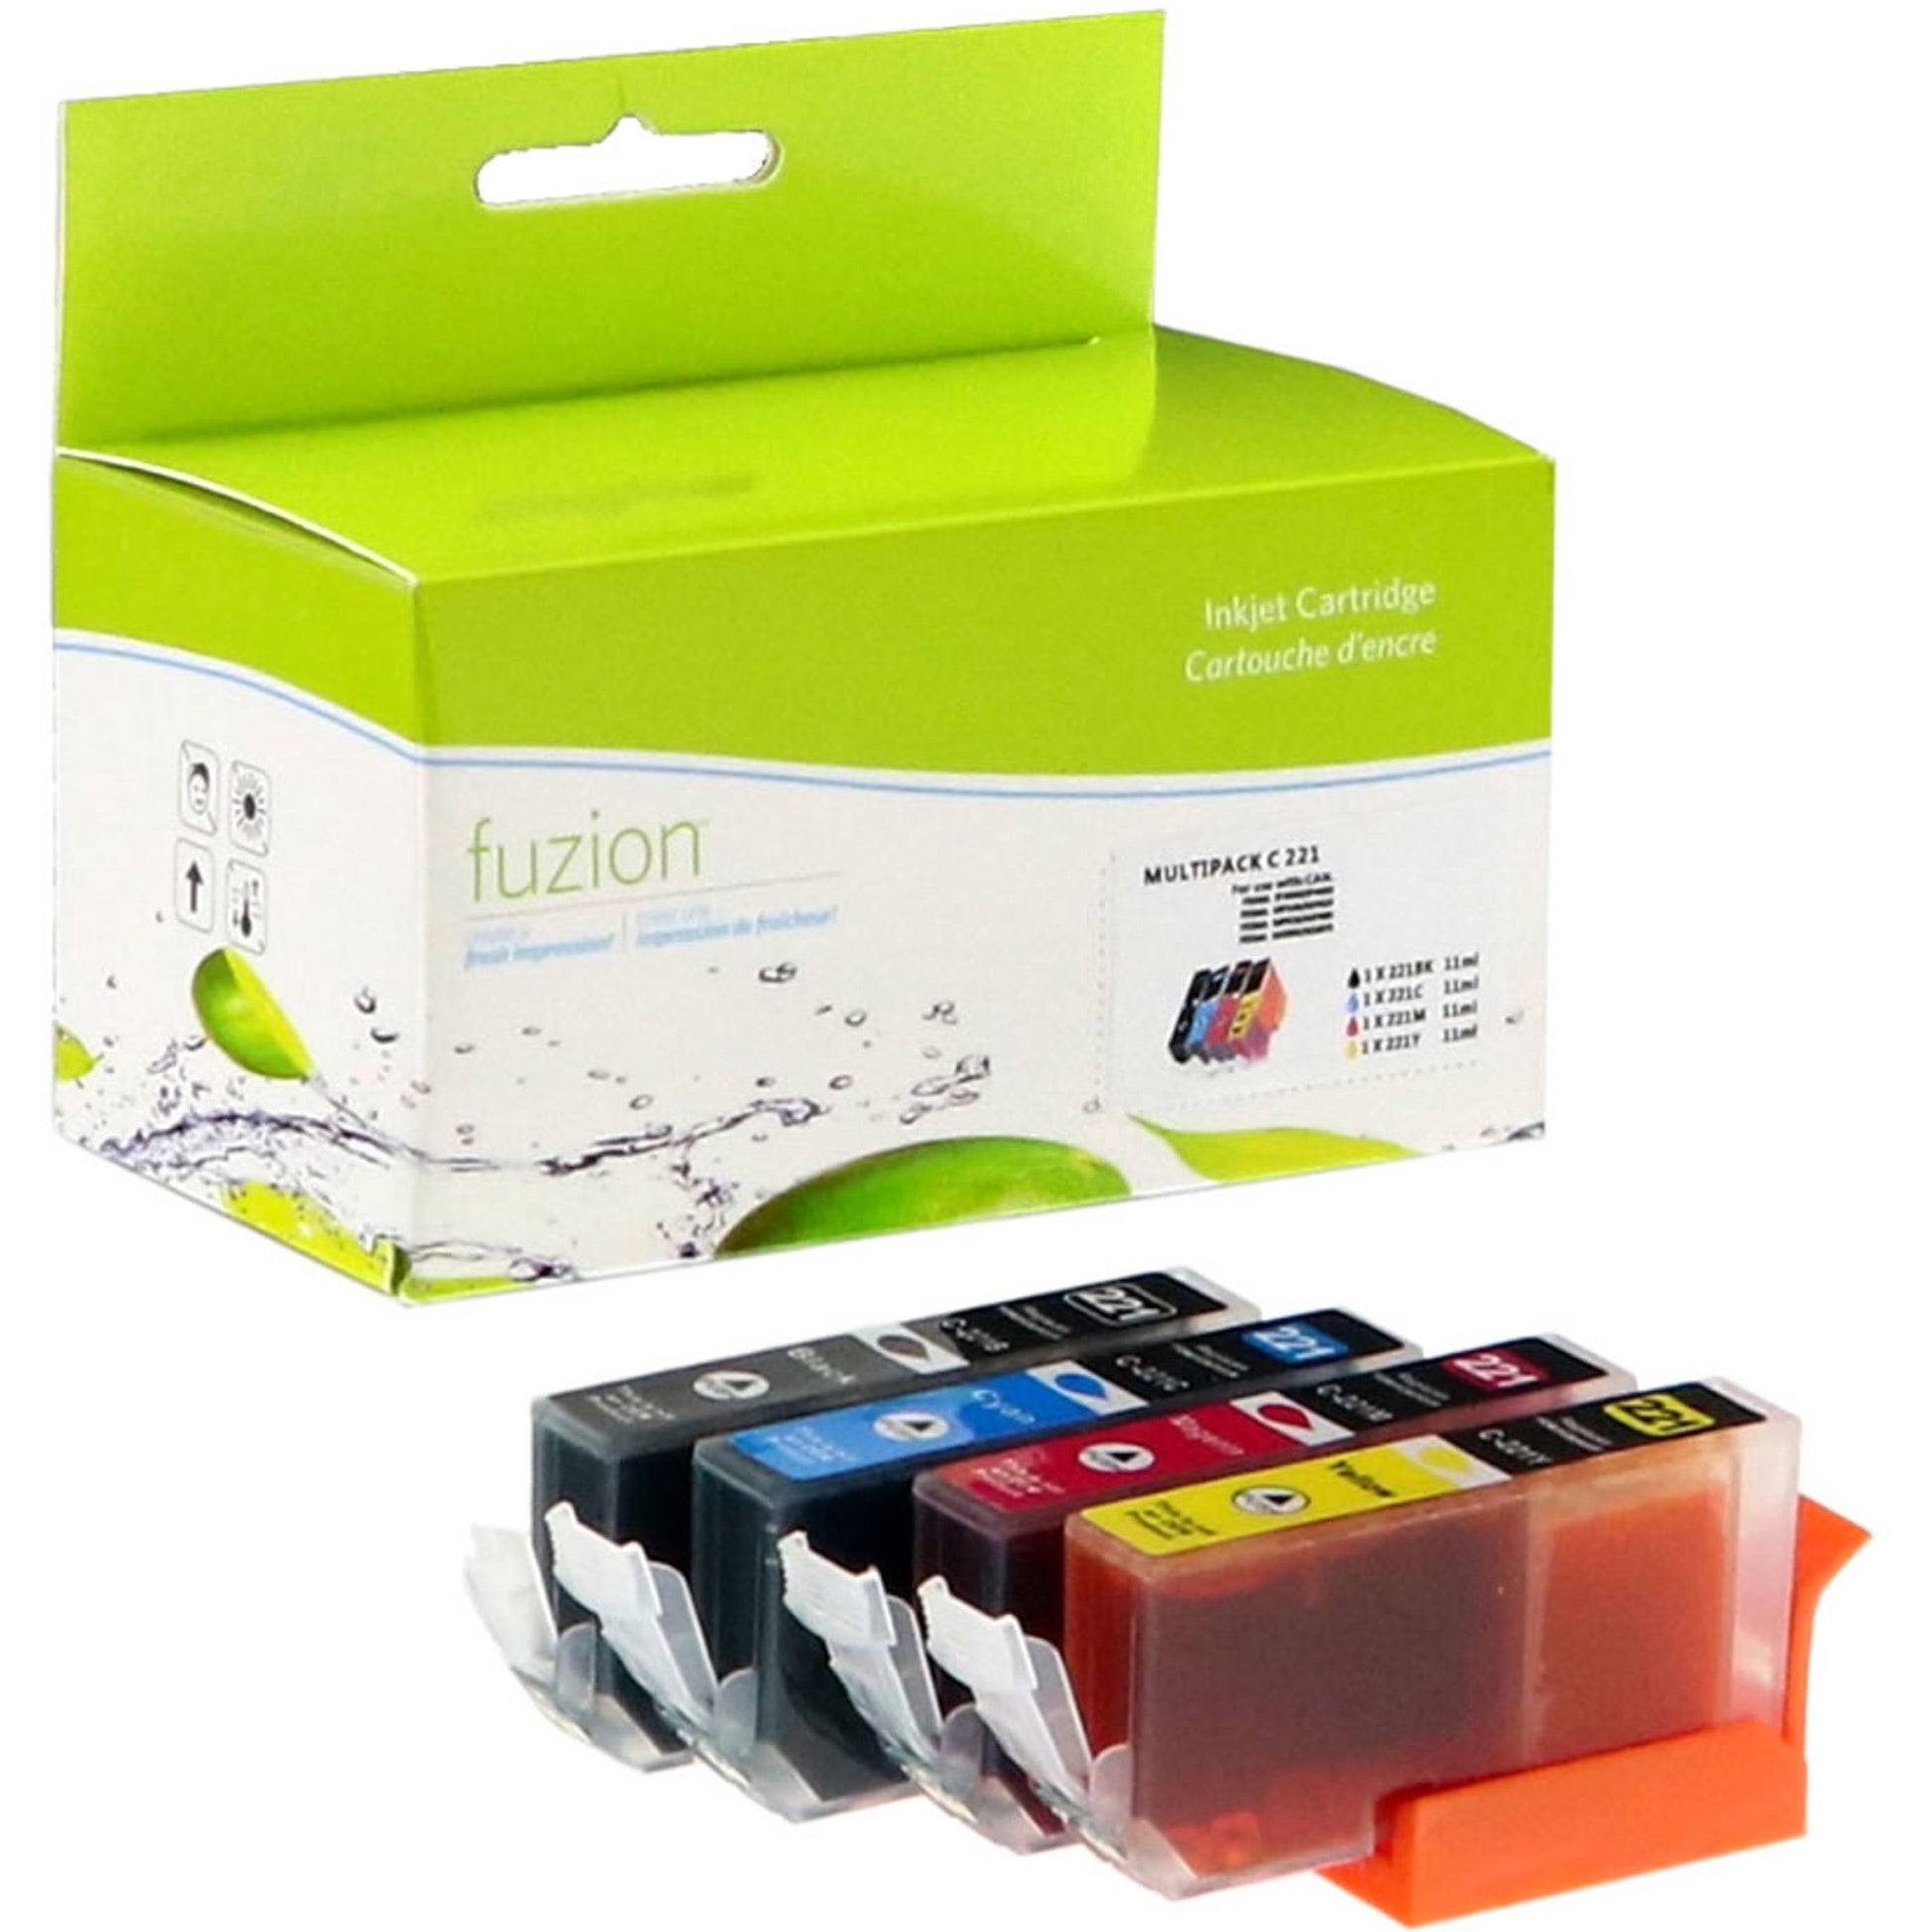 fuzion Ink Cartridge - Alternative for Canon CLI221 - Black, Cyan, Magenta, Yellow